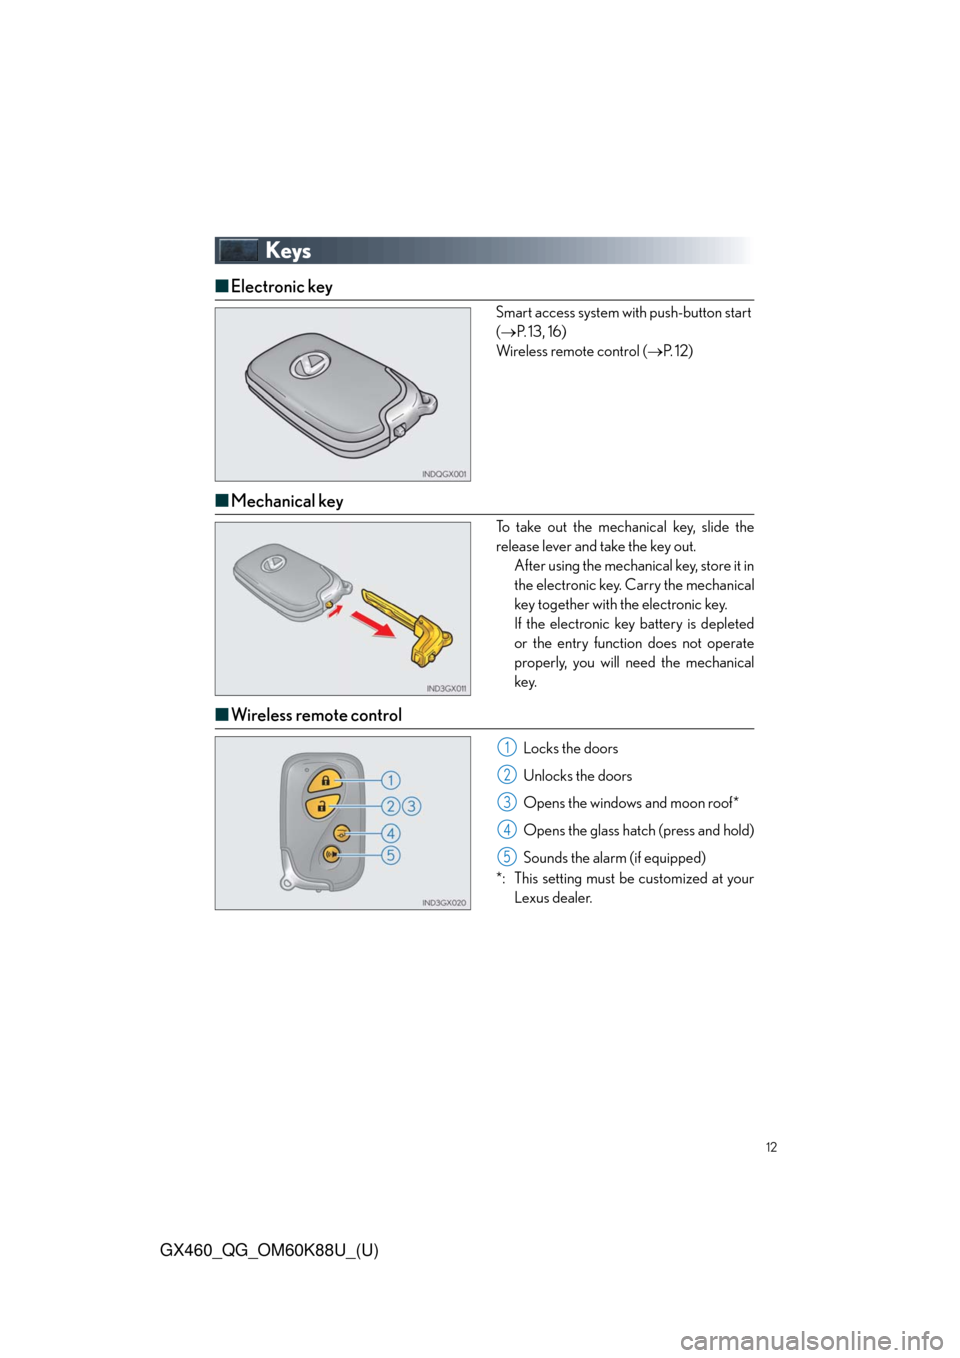 Lexus GX460 2014  Key information / LEXUS 2014 GX460 QUICK GUIDE OWNERS MANUAL (OM60K88U) 12
GX460_QG_OM60K88U_(U)
Keys
■Electronic key
Smart access system with push-button start 
(P. 13, 16)
Wireless remote control (P. 1 2 )
■Mechanical key
To take out the mechanical key, slide 